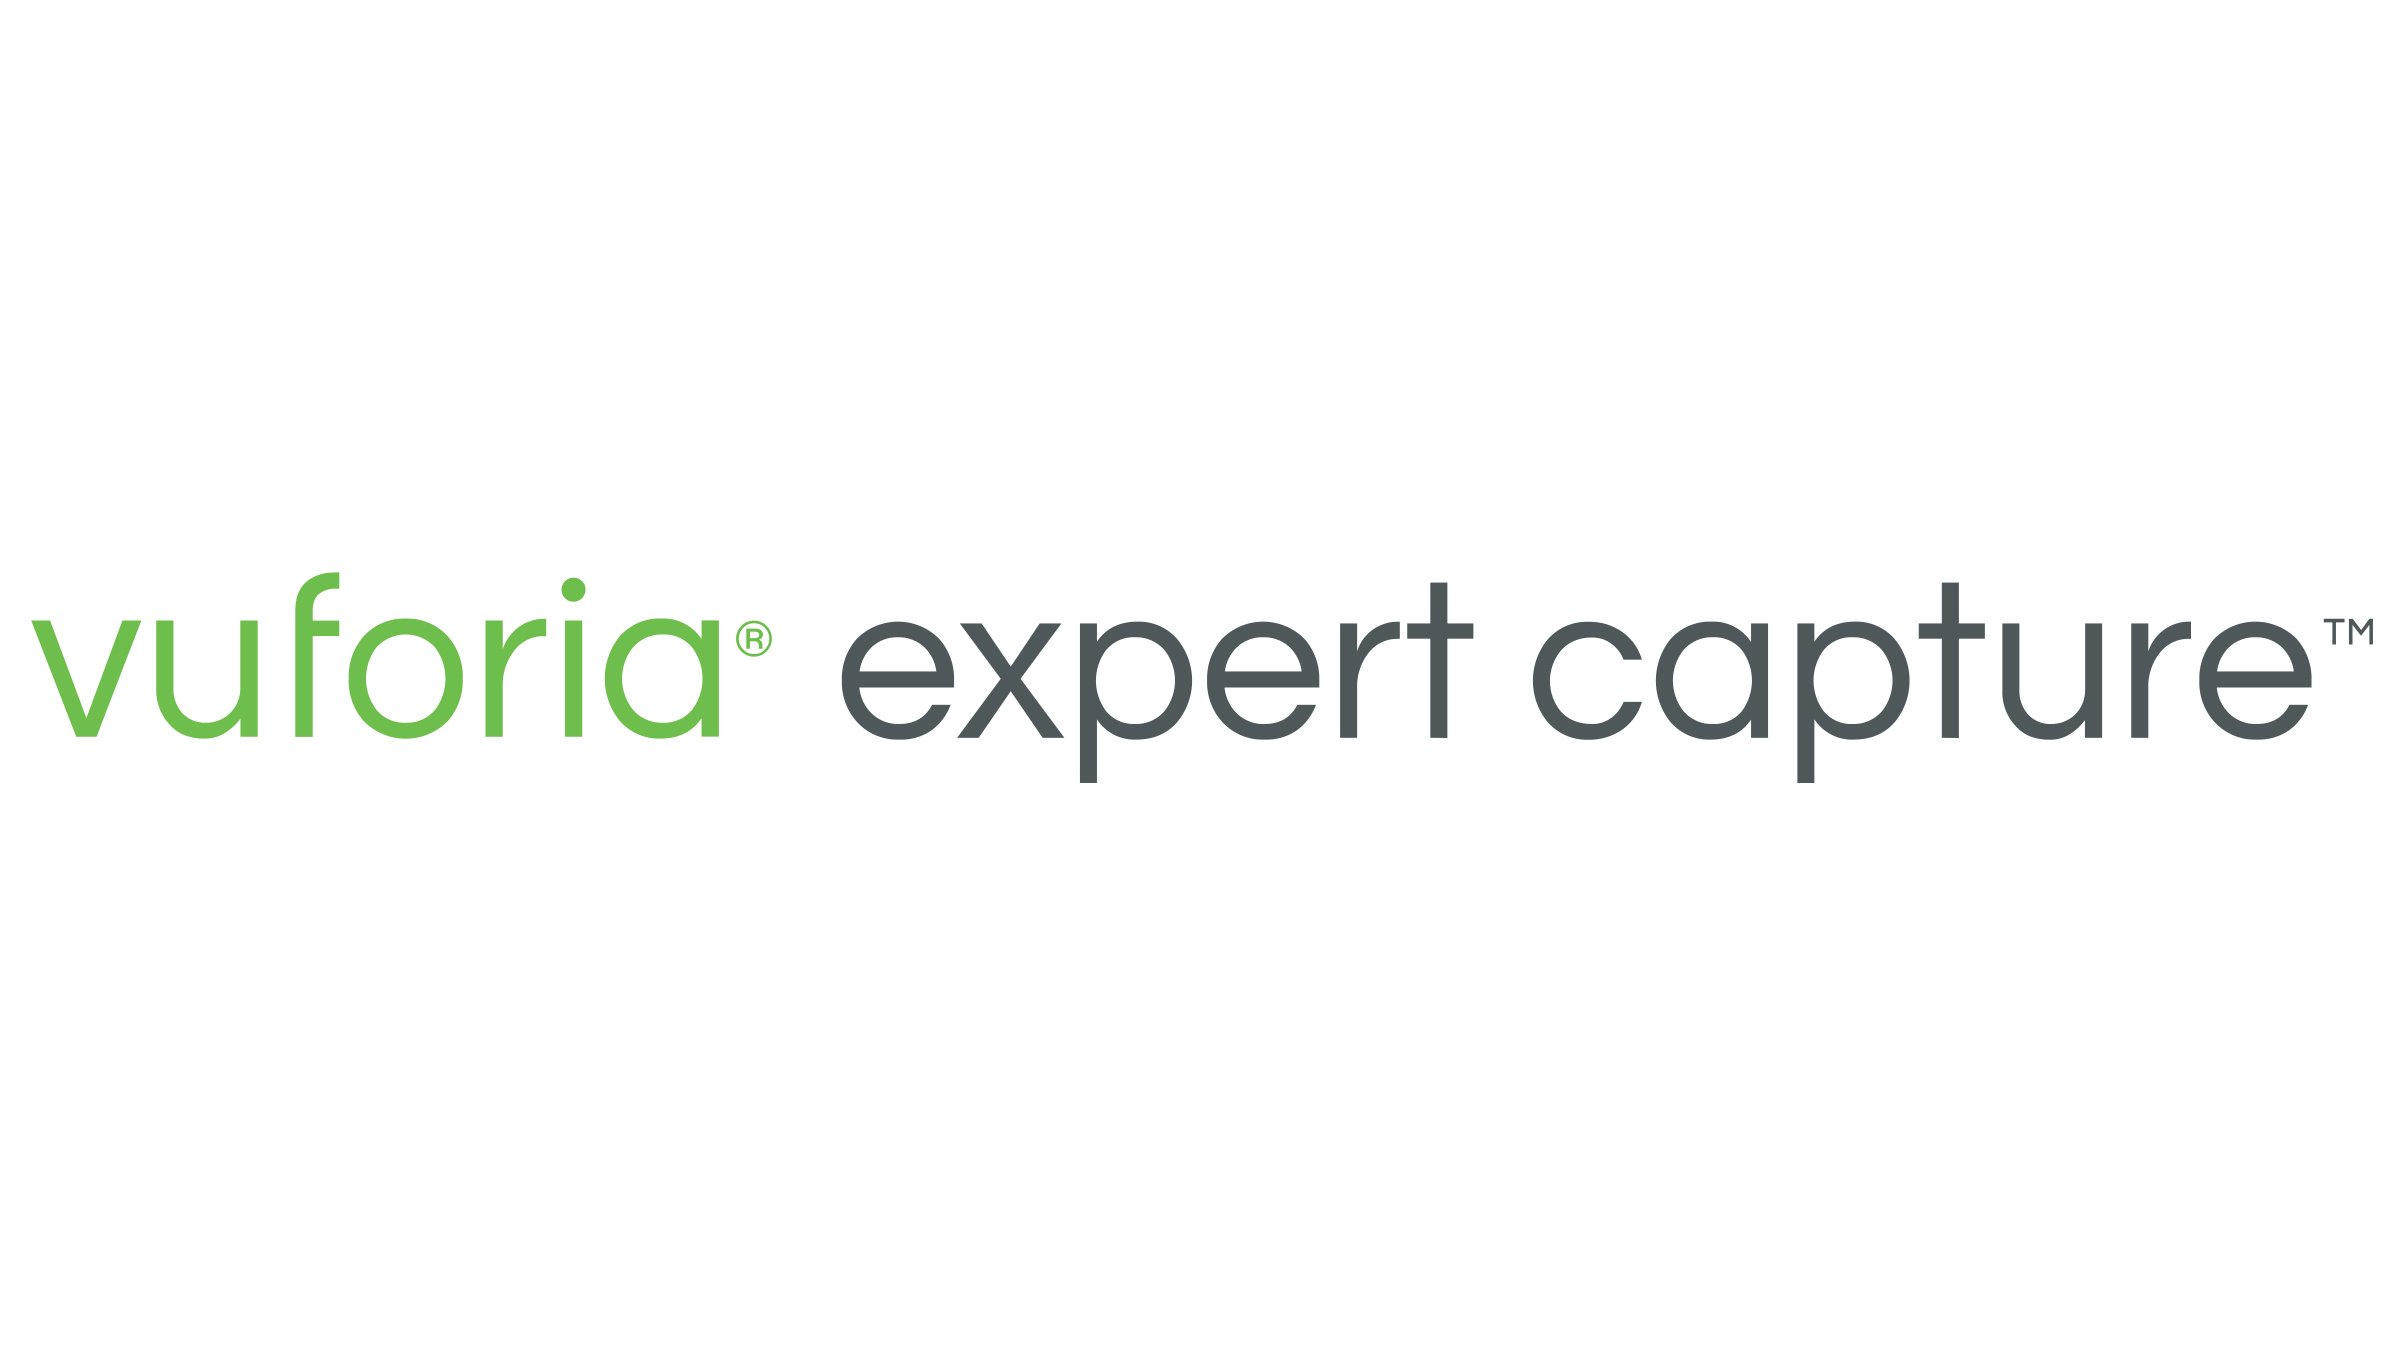 Logotipo verde y gris de PTC Vuforia Expert Capture